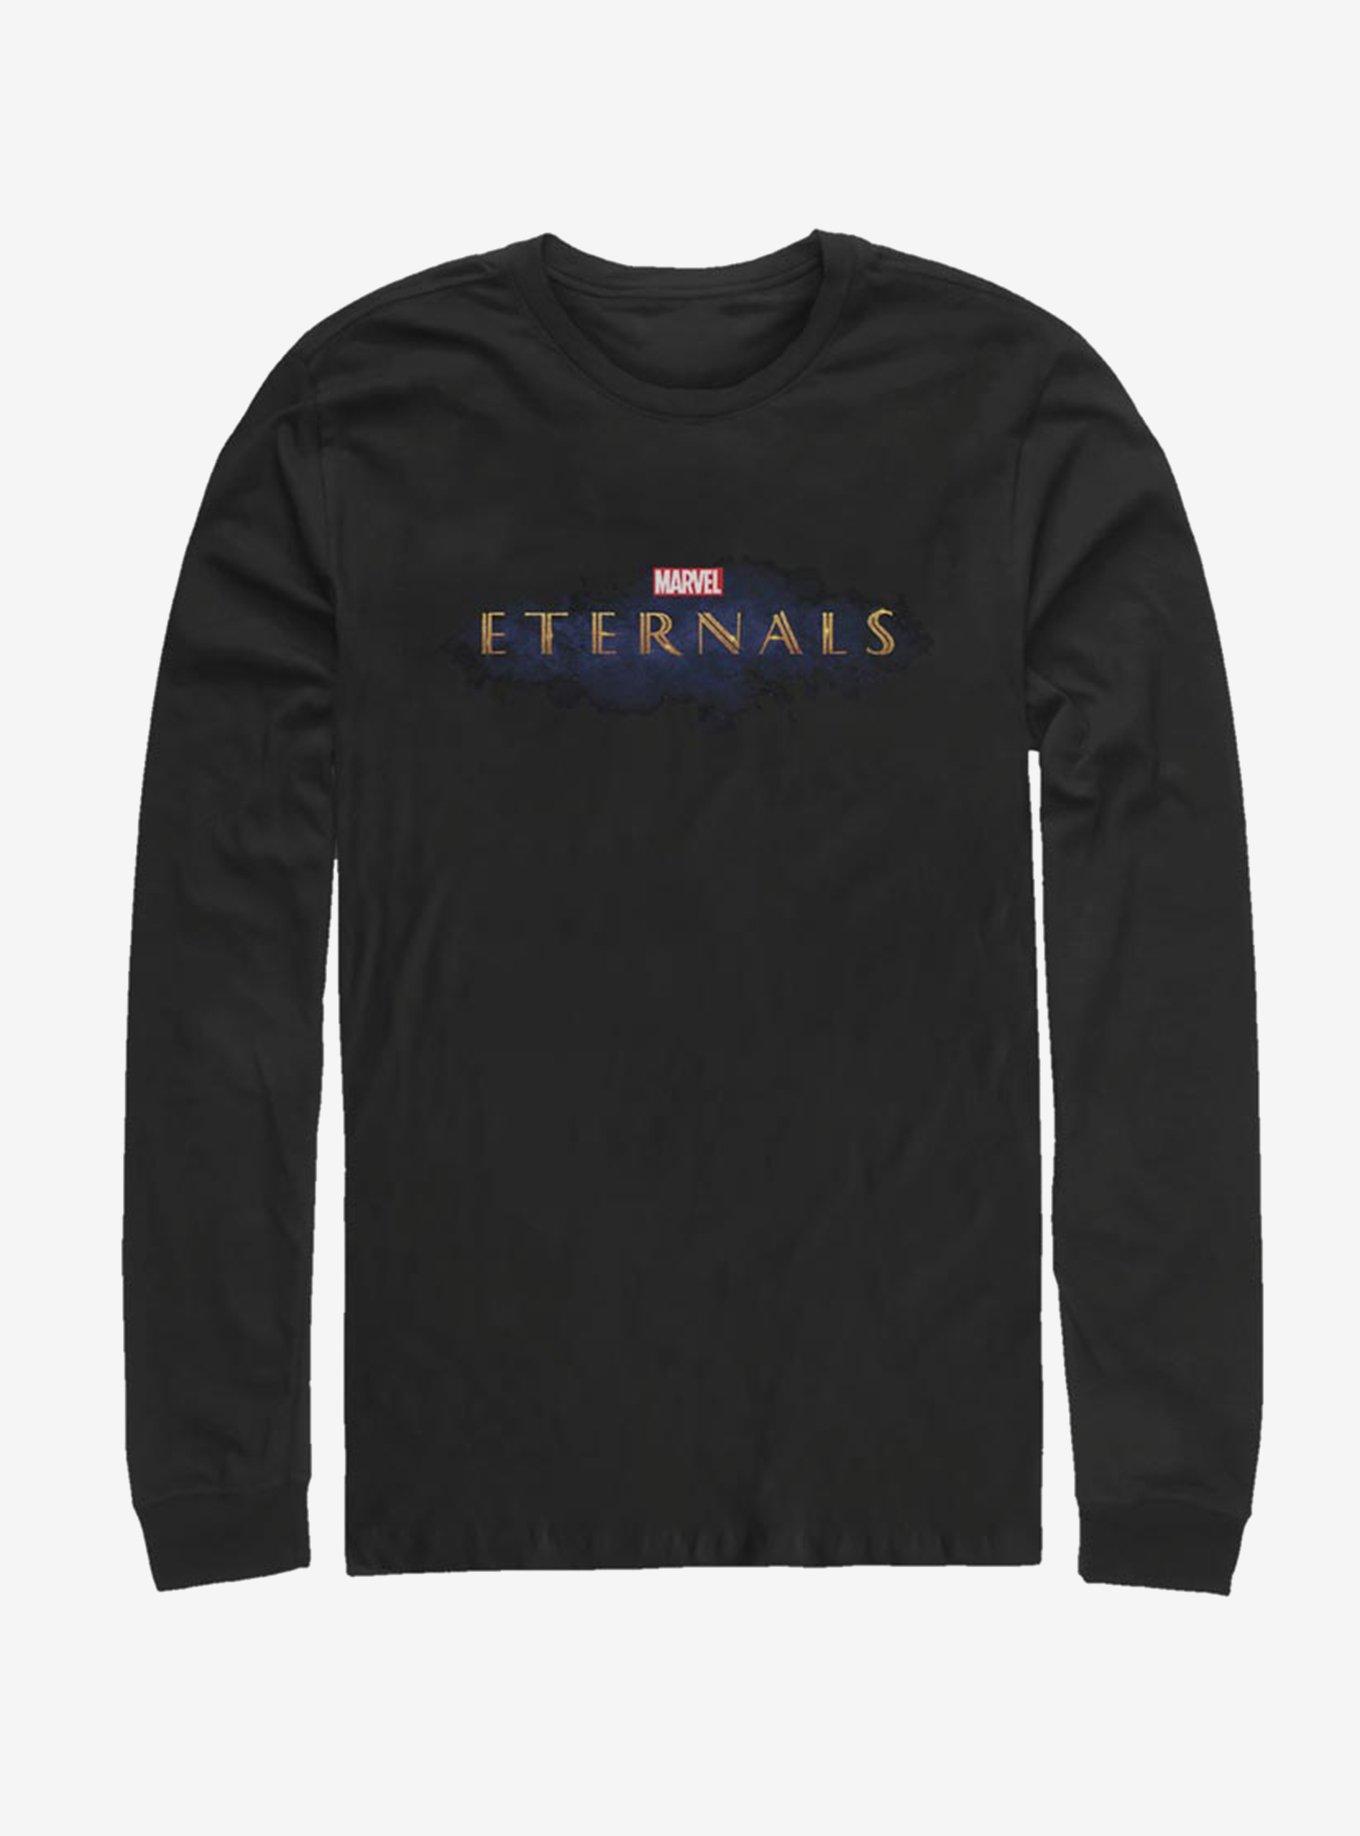 Marvel Eternals 2019 Logo Long-Sleeve T-Shirt, BLACK, hi-res